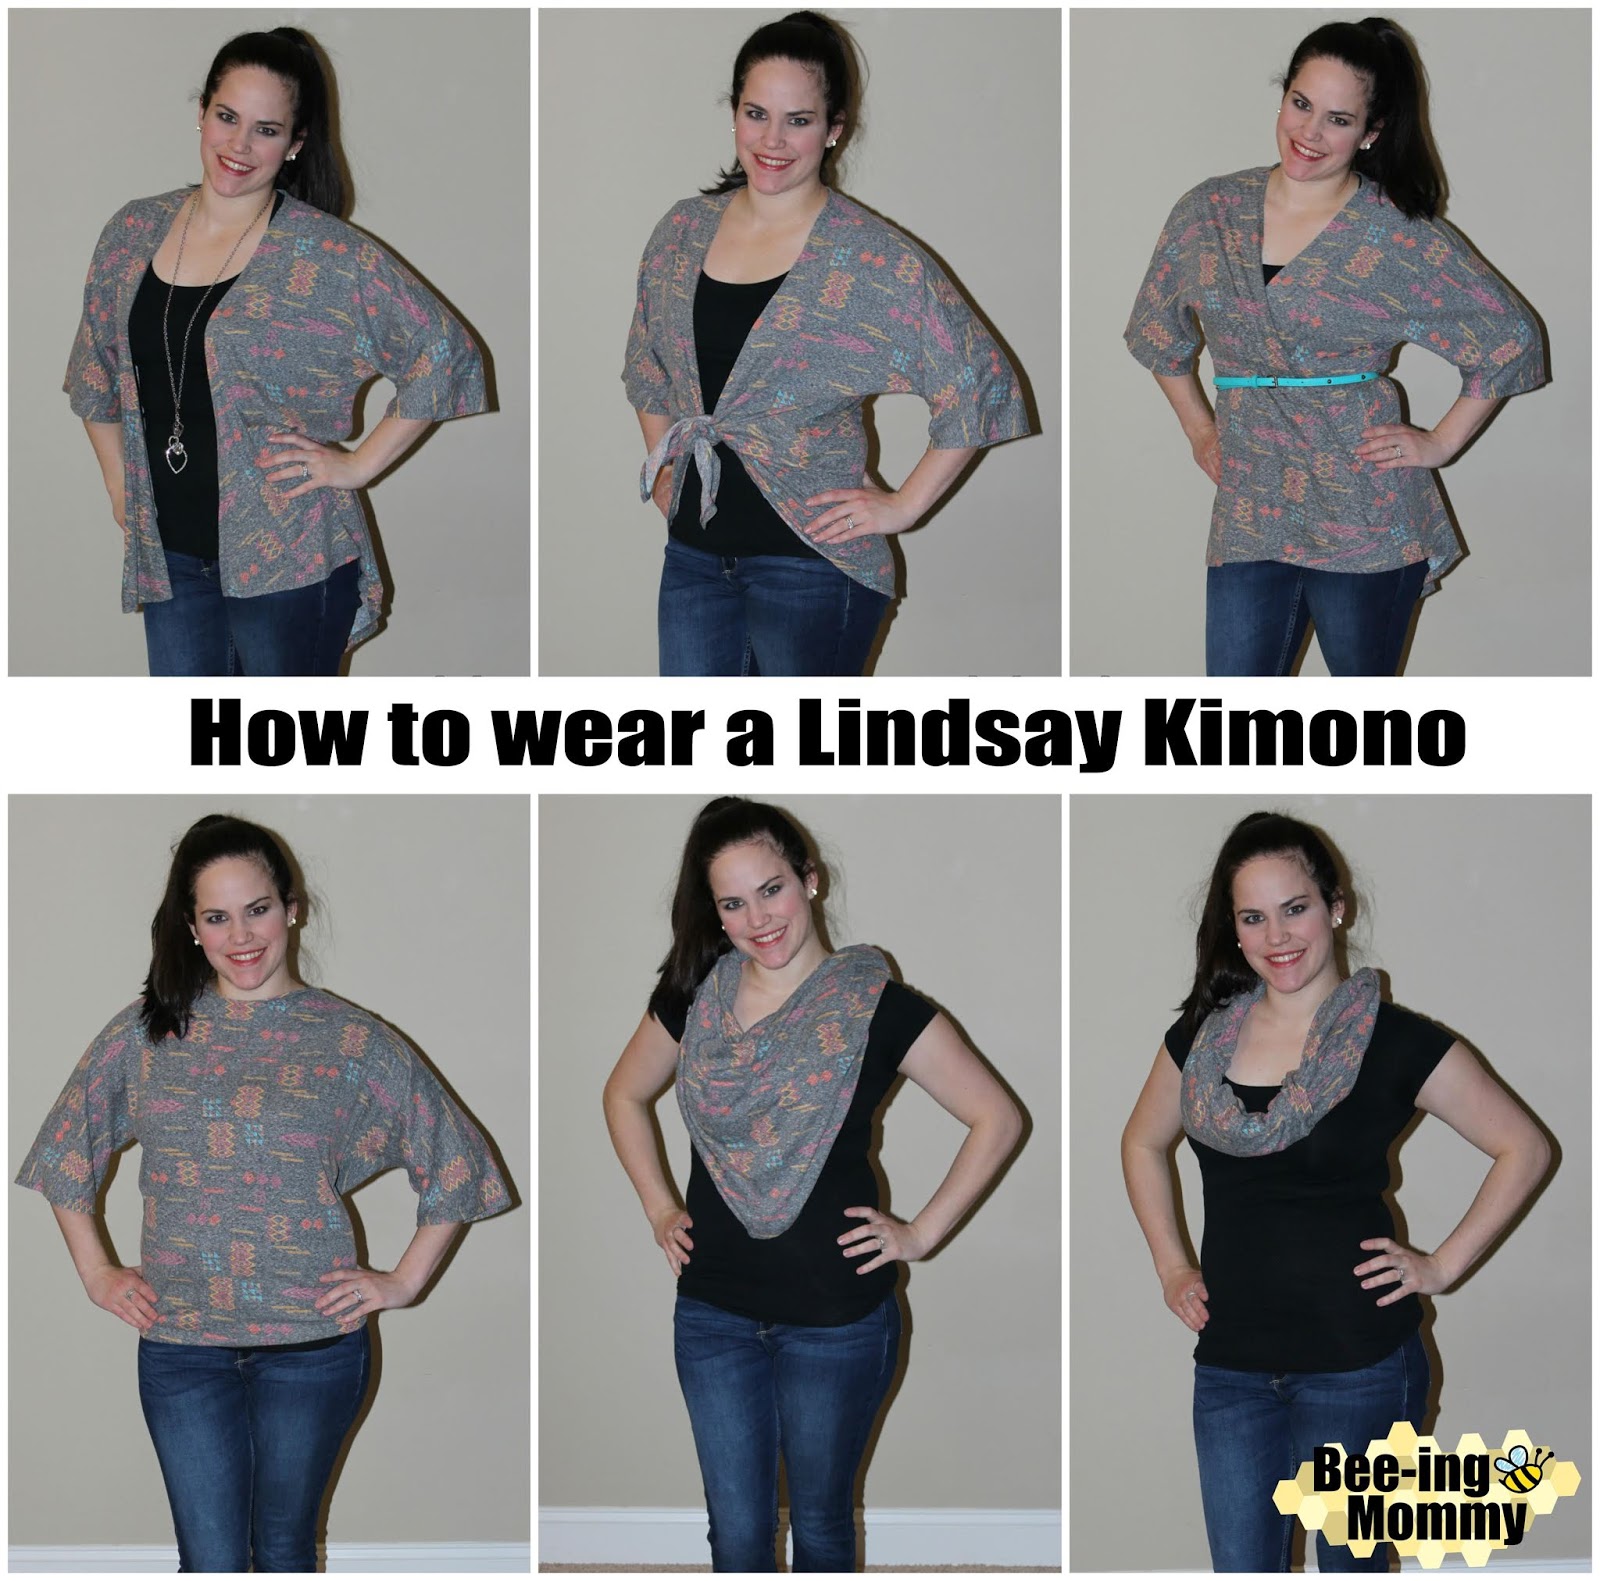 Lularoe Lindsay Kimono Size Chart